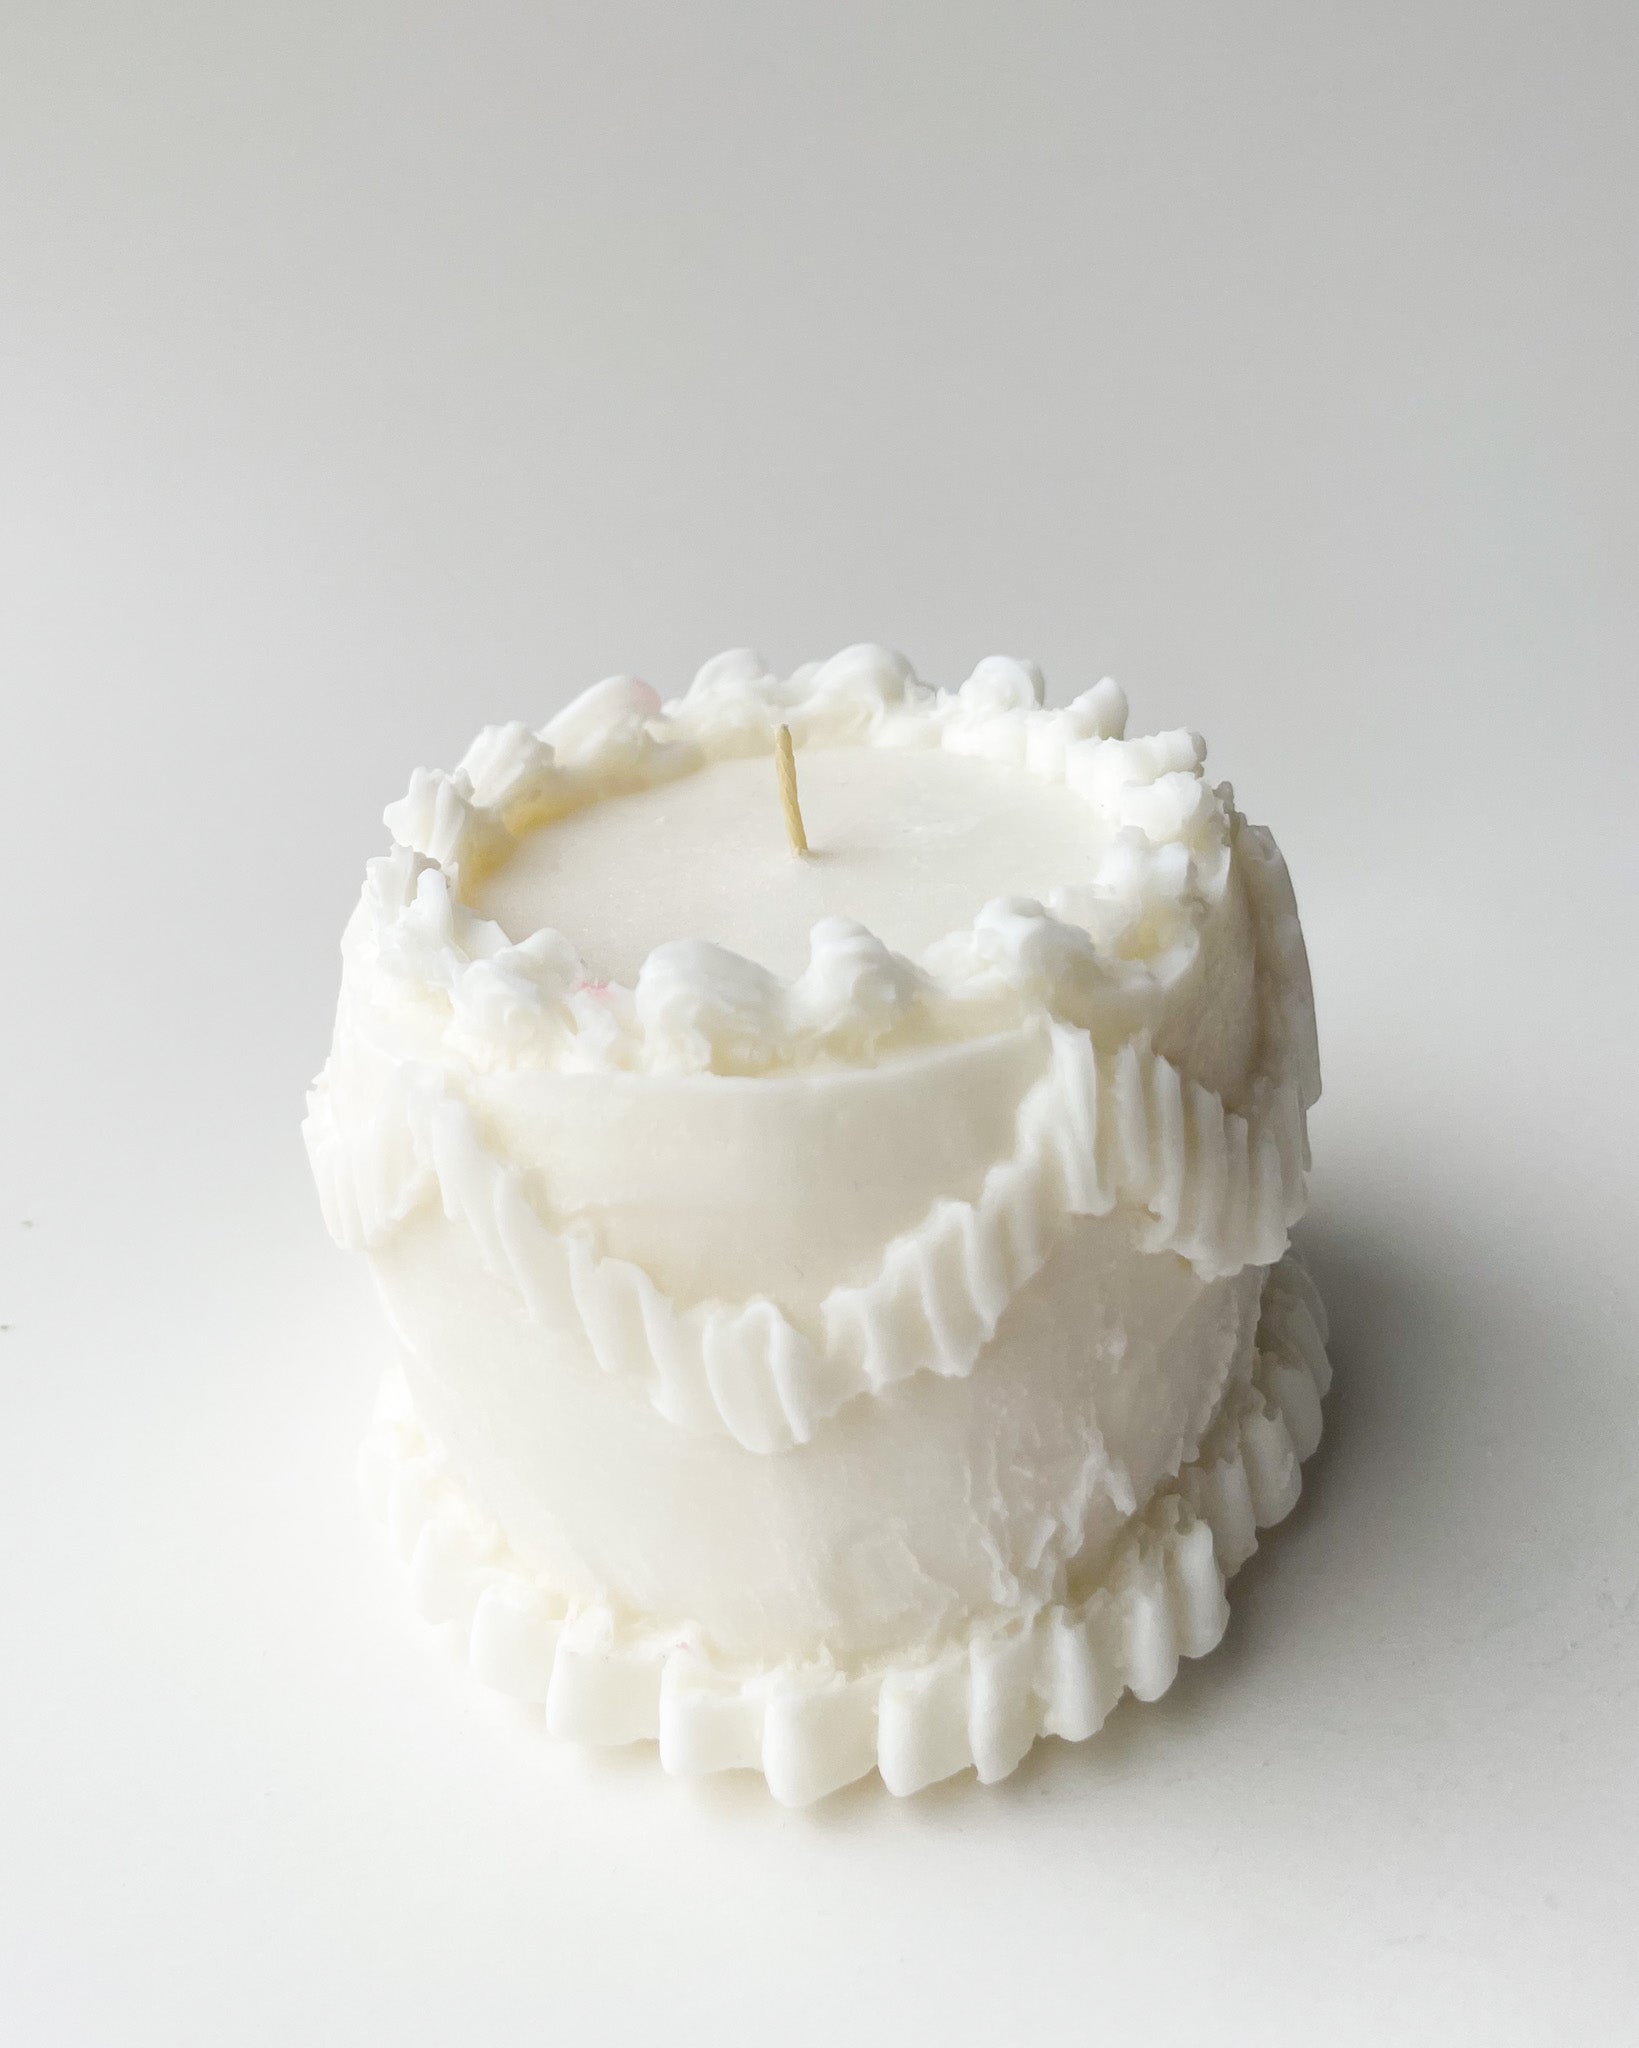 Skinny Mini Candle 1oz (Vanilla Cake) – Skinny Dip Candle